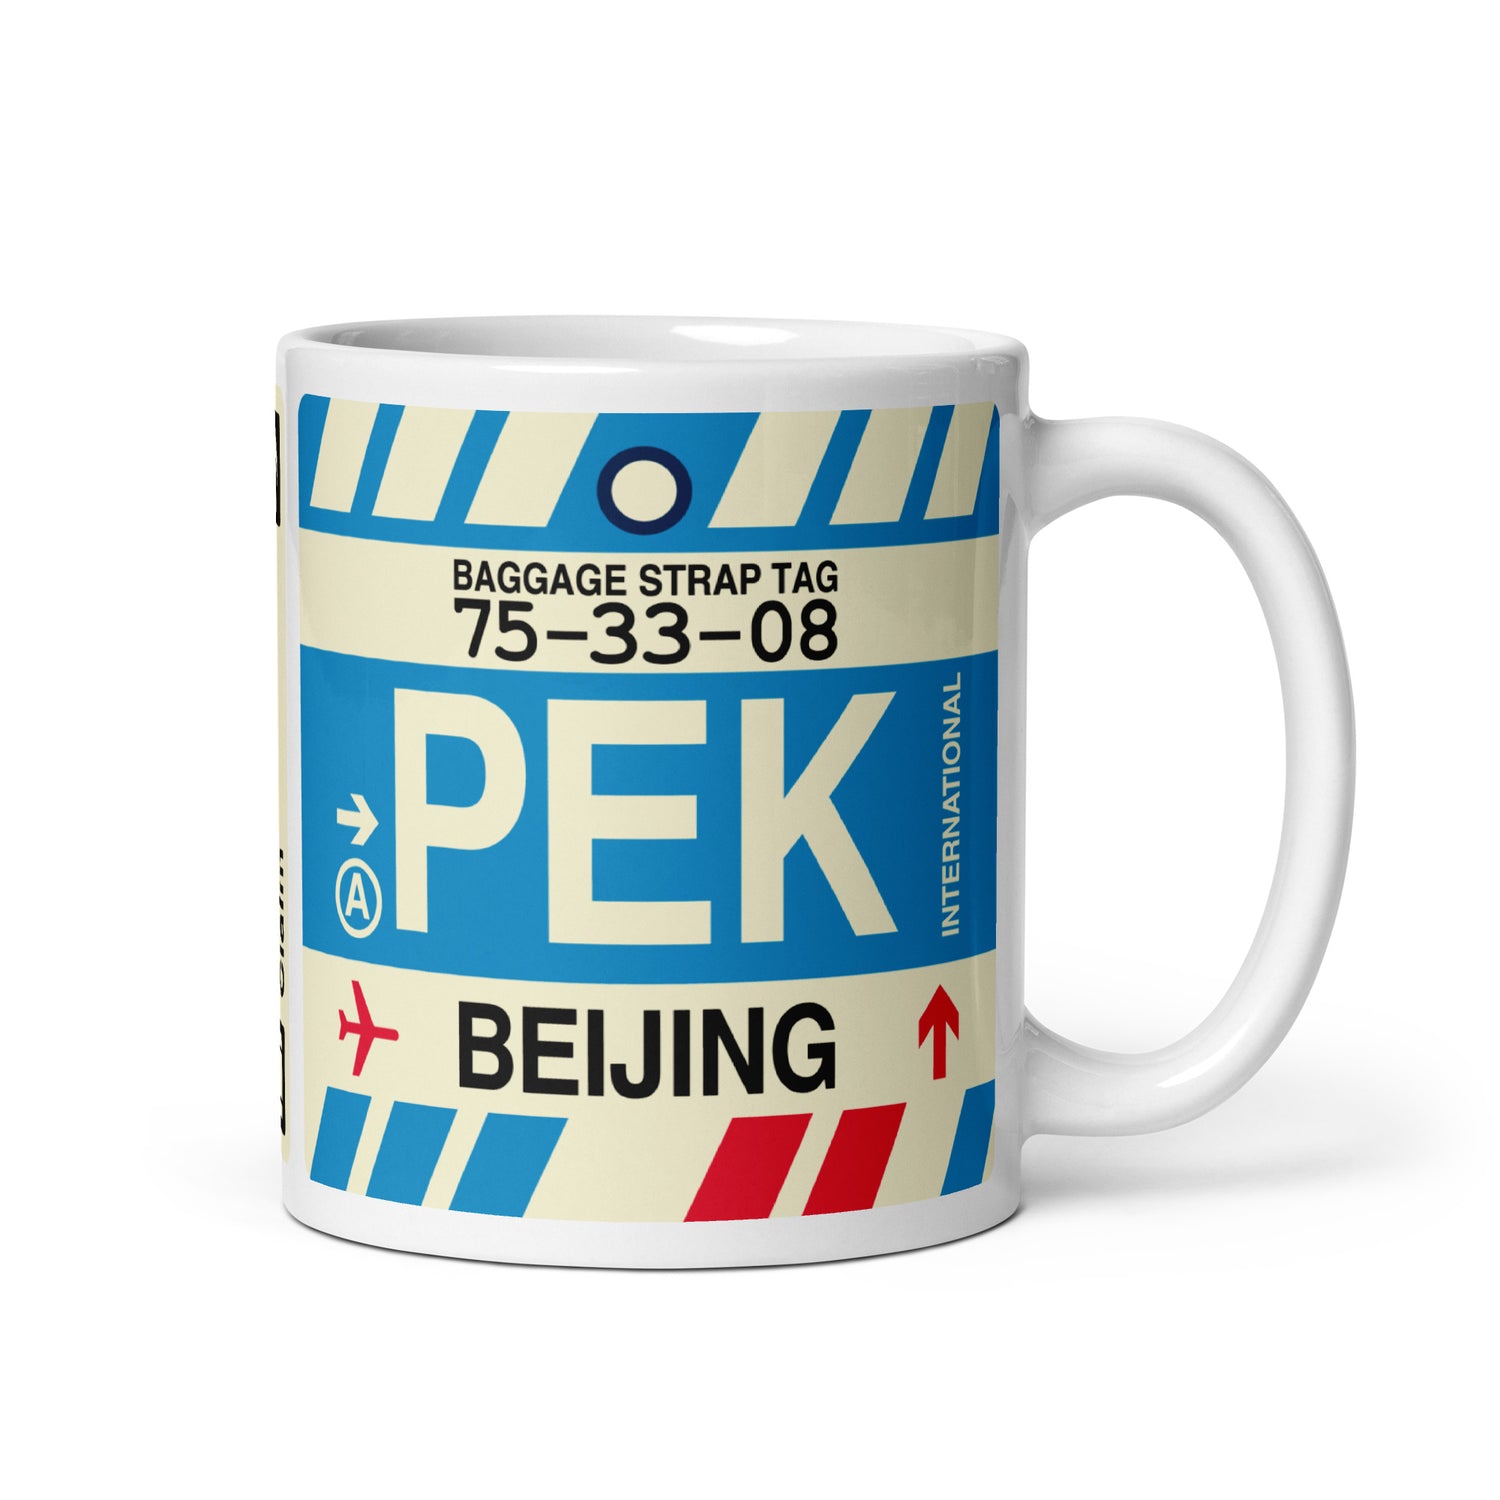 Beijing China Coffee Mugs and Water Bottles • PEK Airport Code